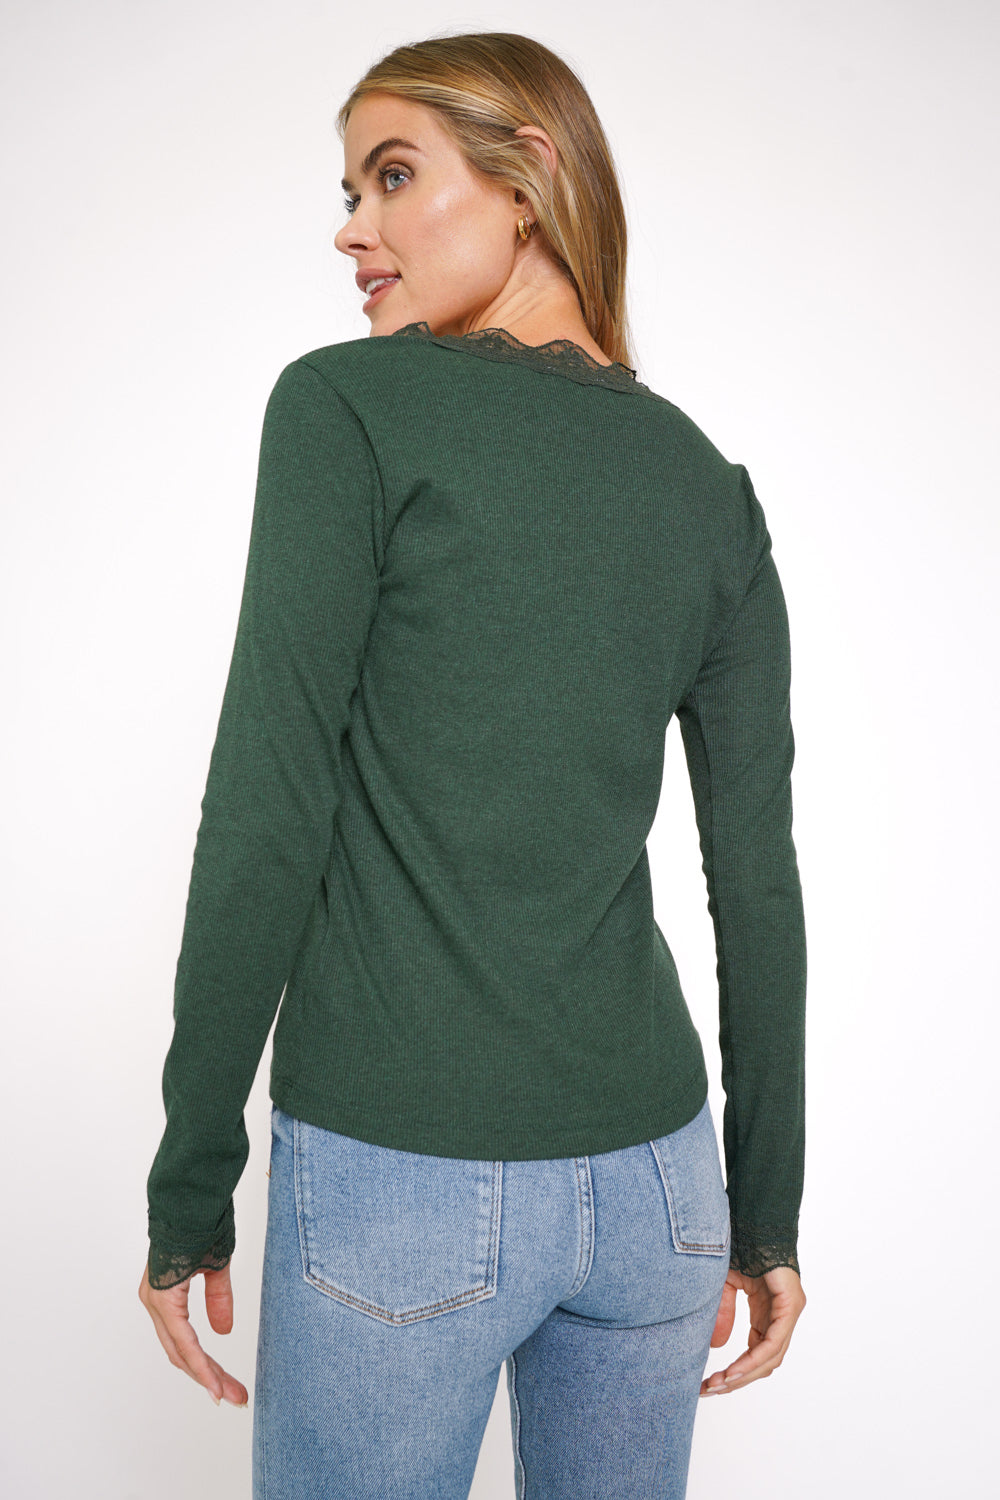 Hunter Green Lace Sweater